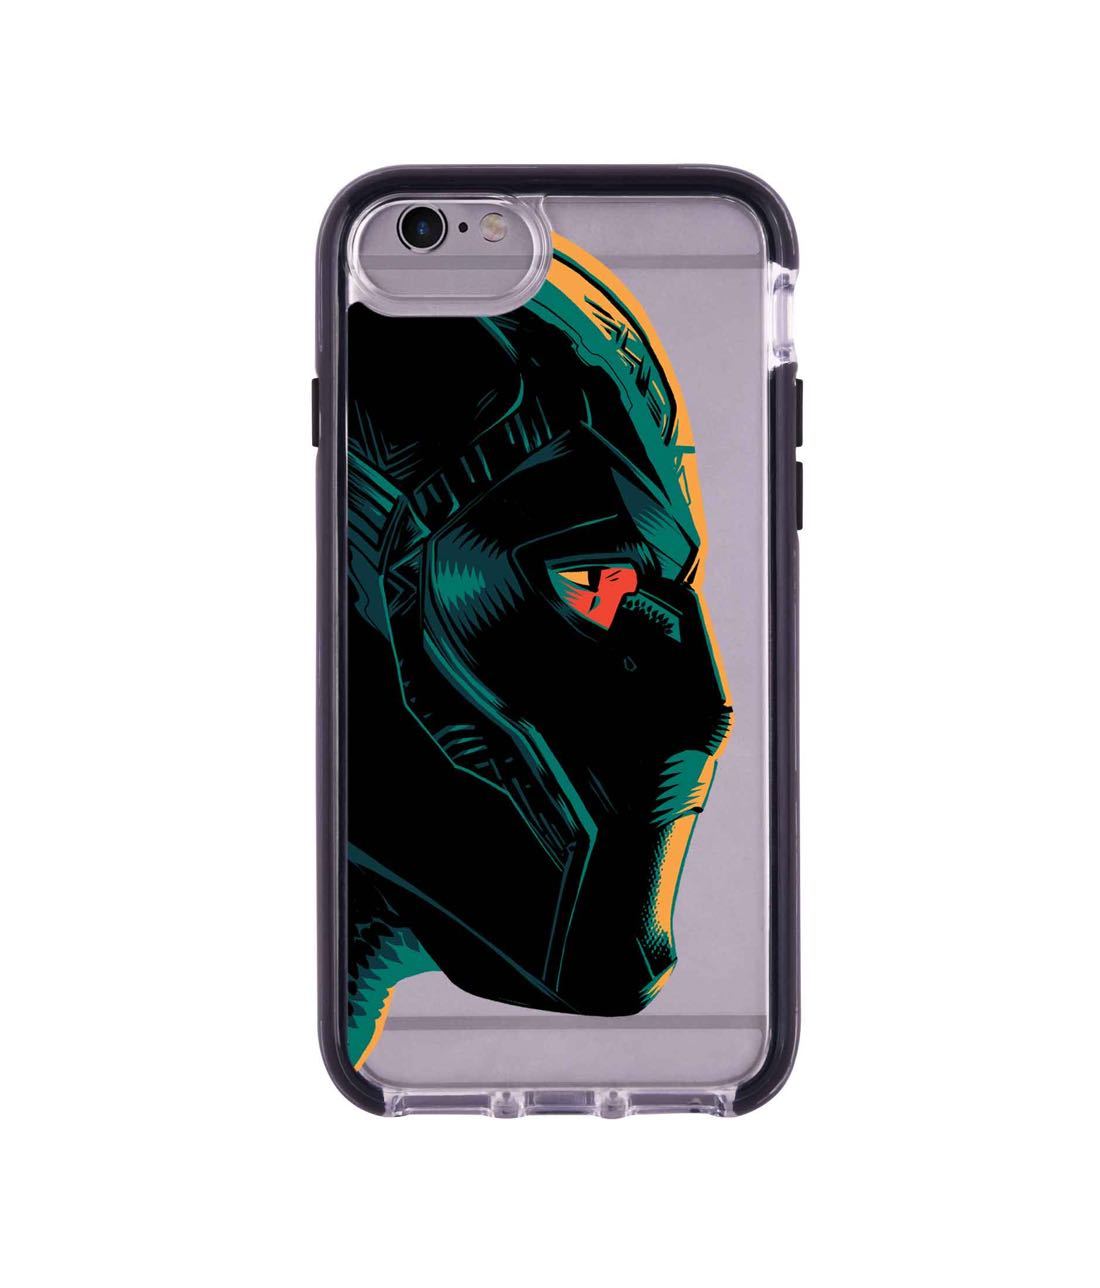 Illuminated Black Panther - Extreme Phone Case for iPhone 6 Plus